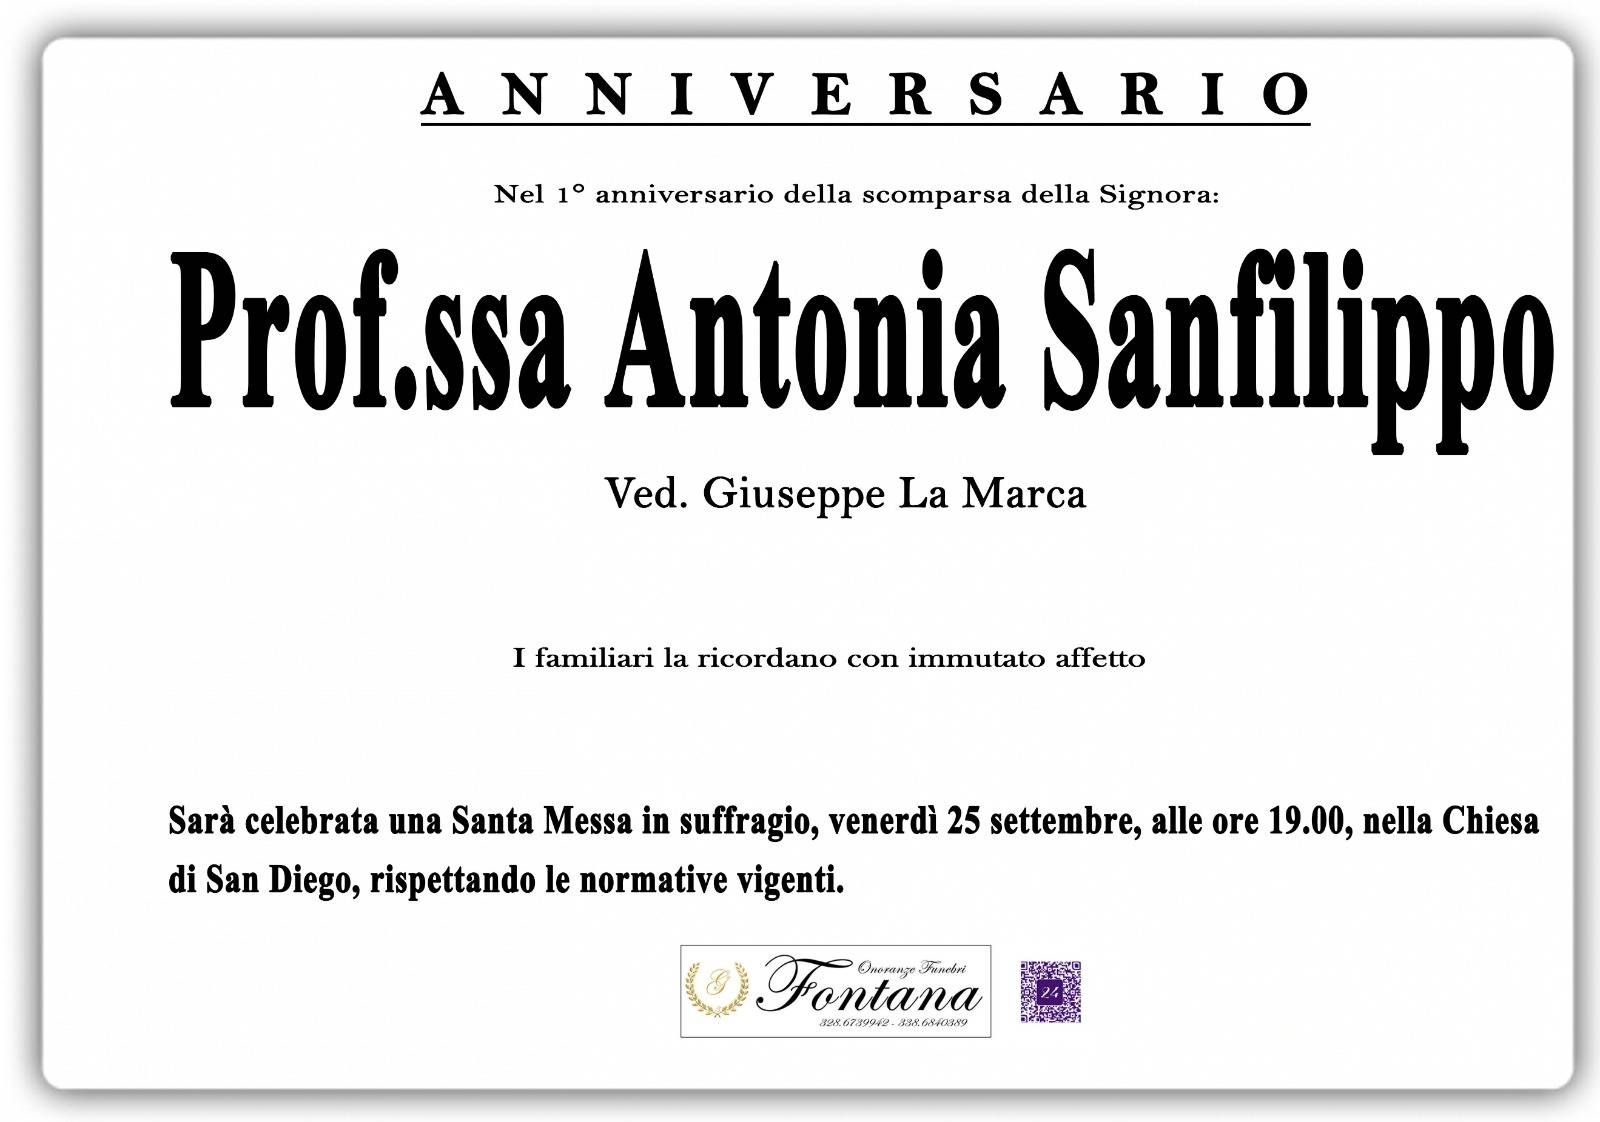 Antonia Sanfilippo